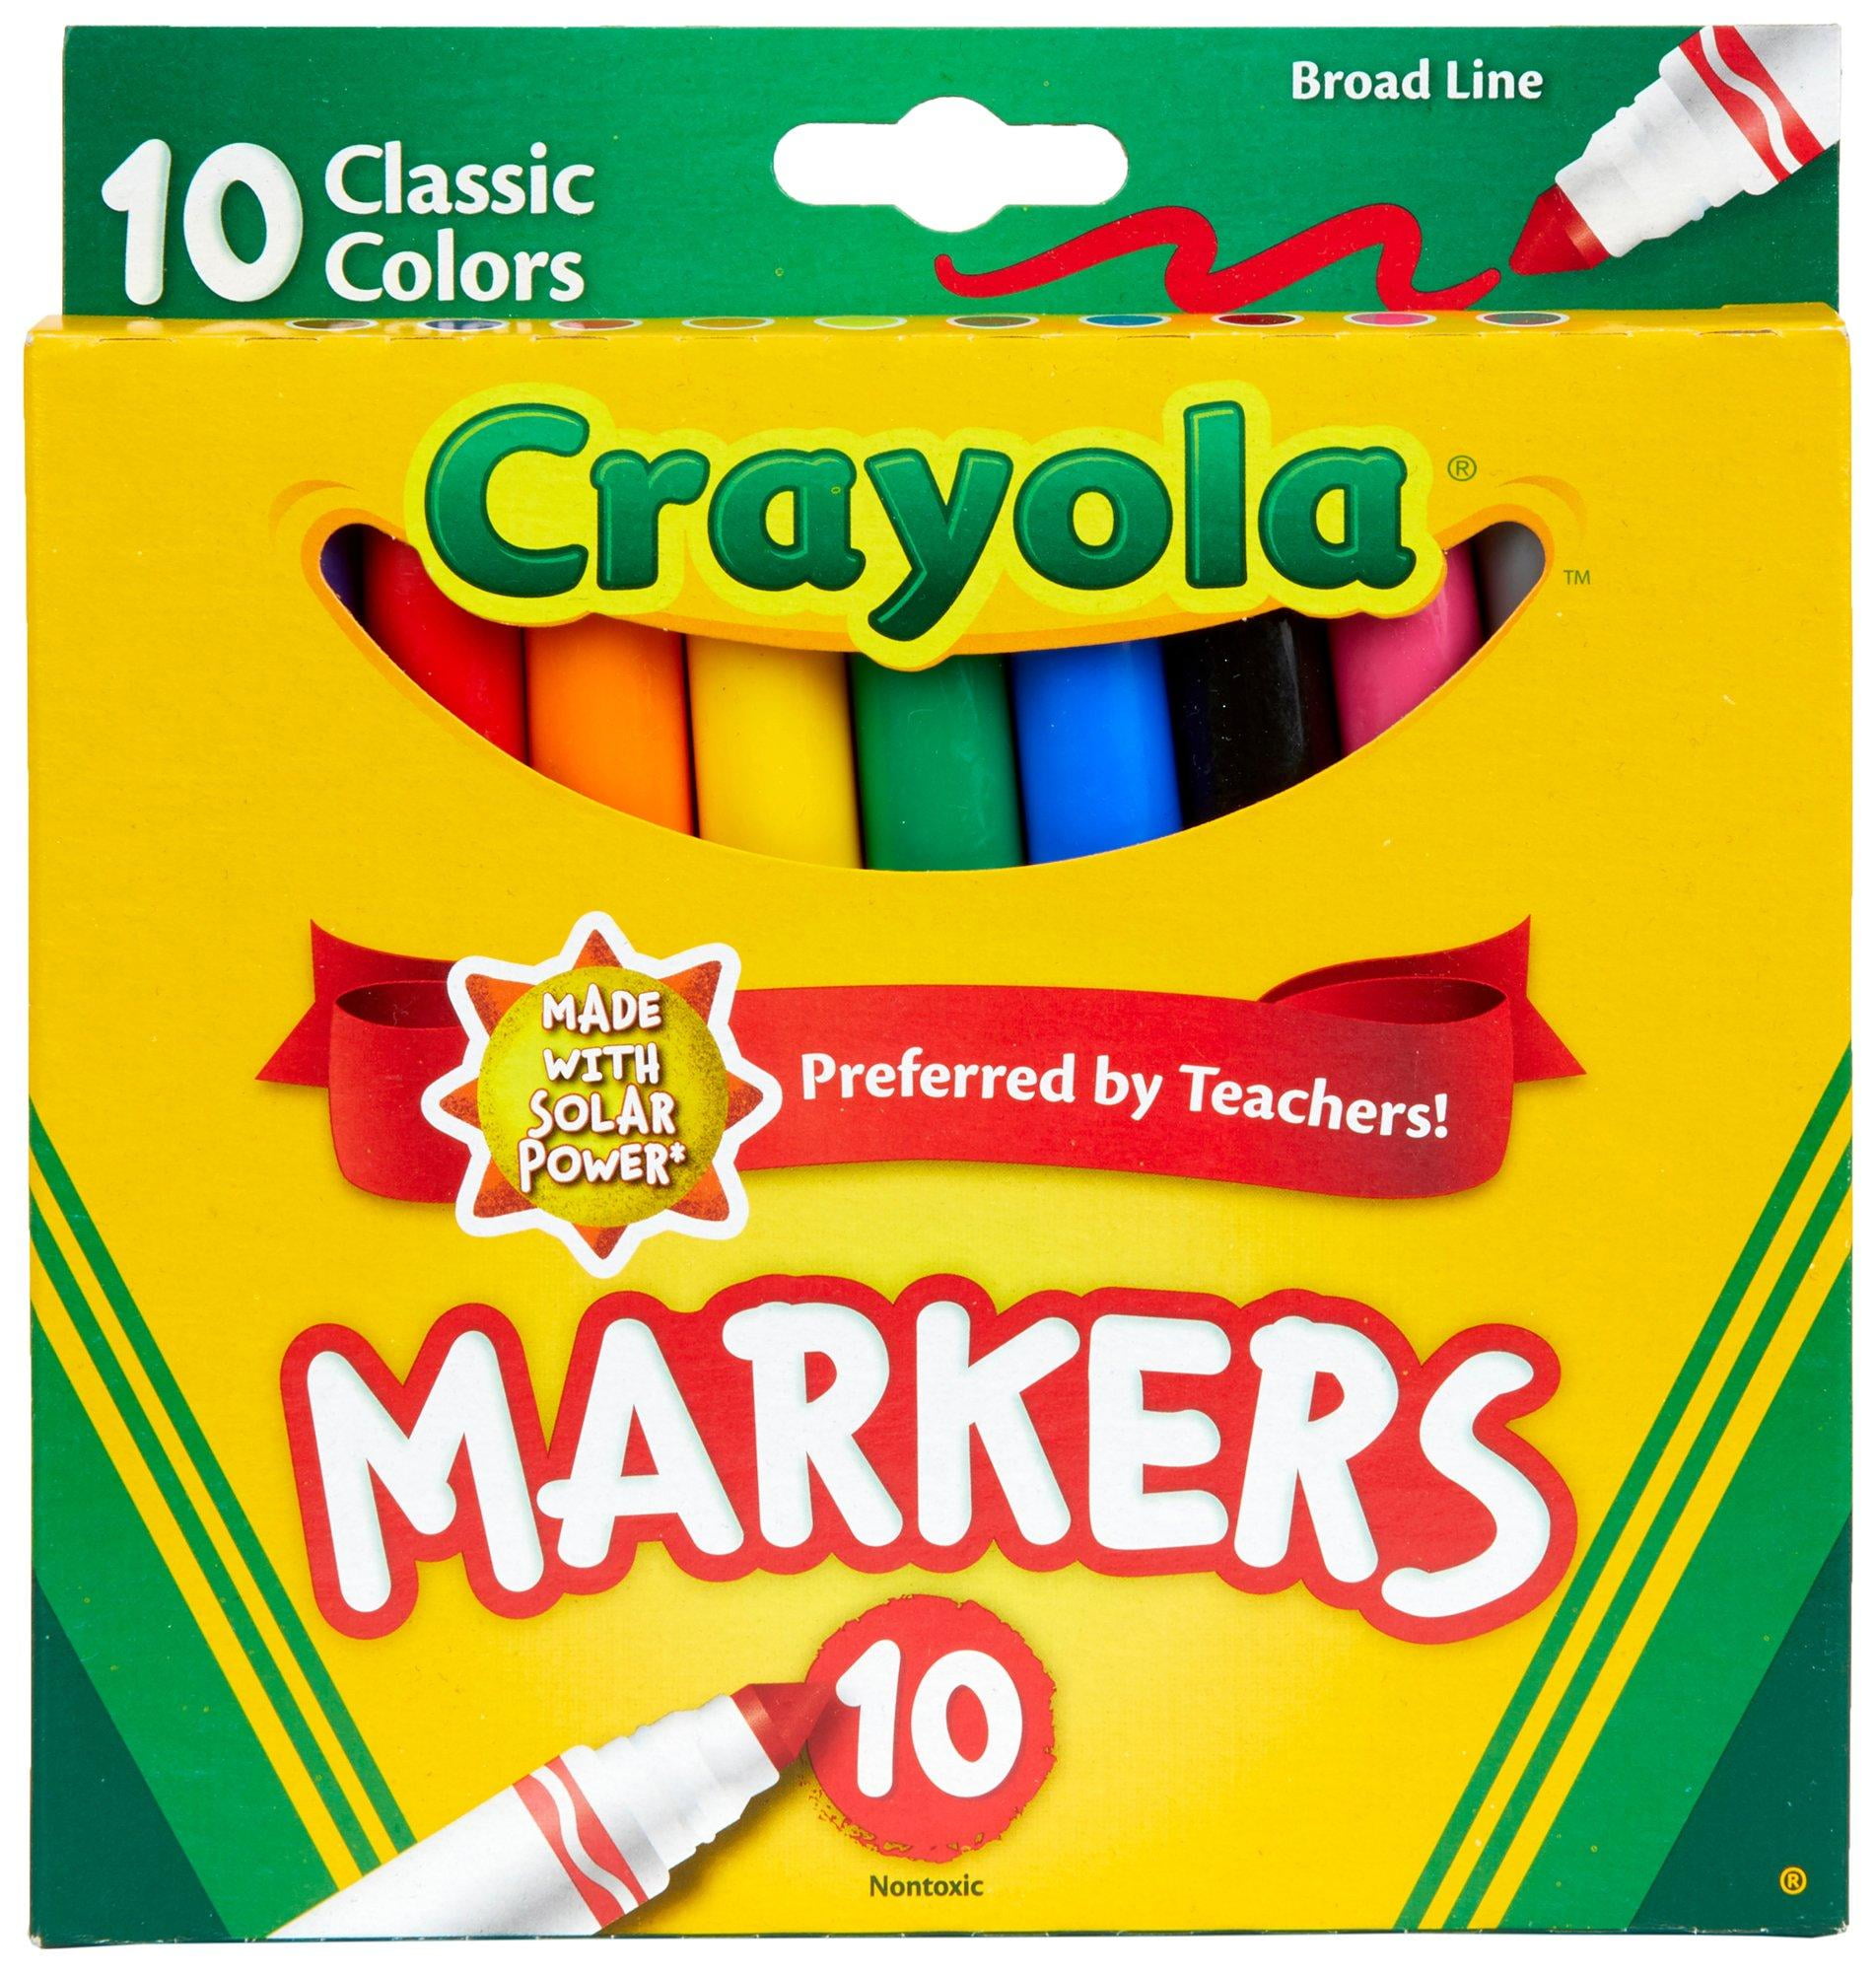 Crayola Broad Line Markers, 10 Count, Back to School Supplies, Beginner Child